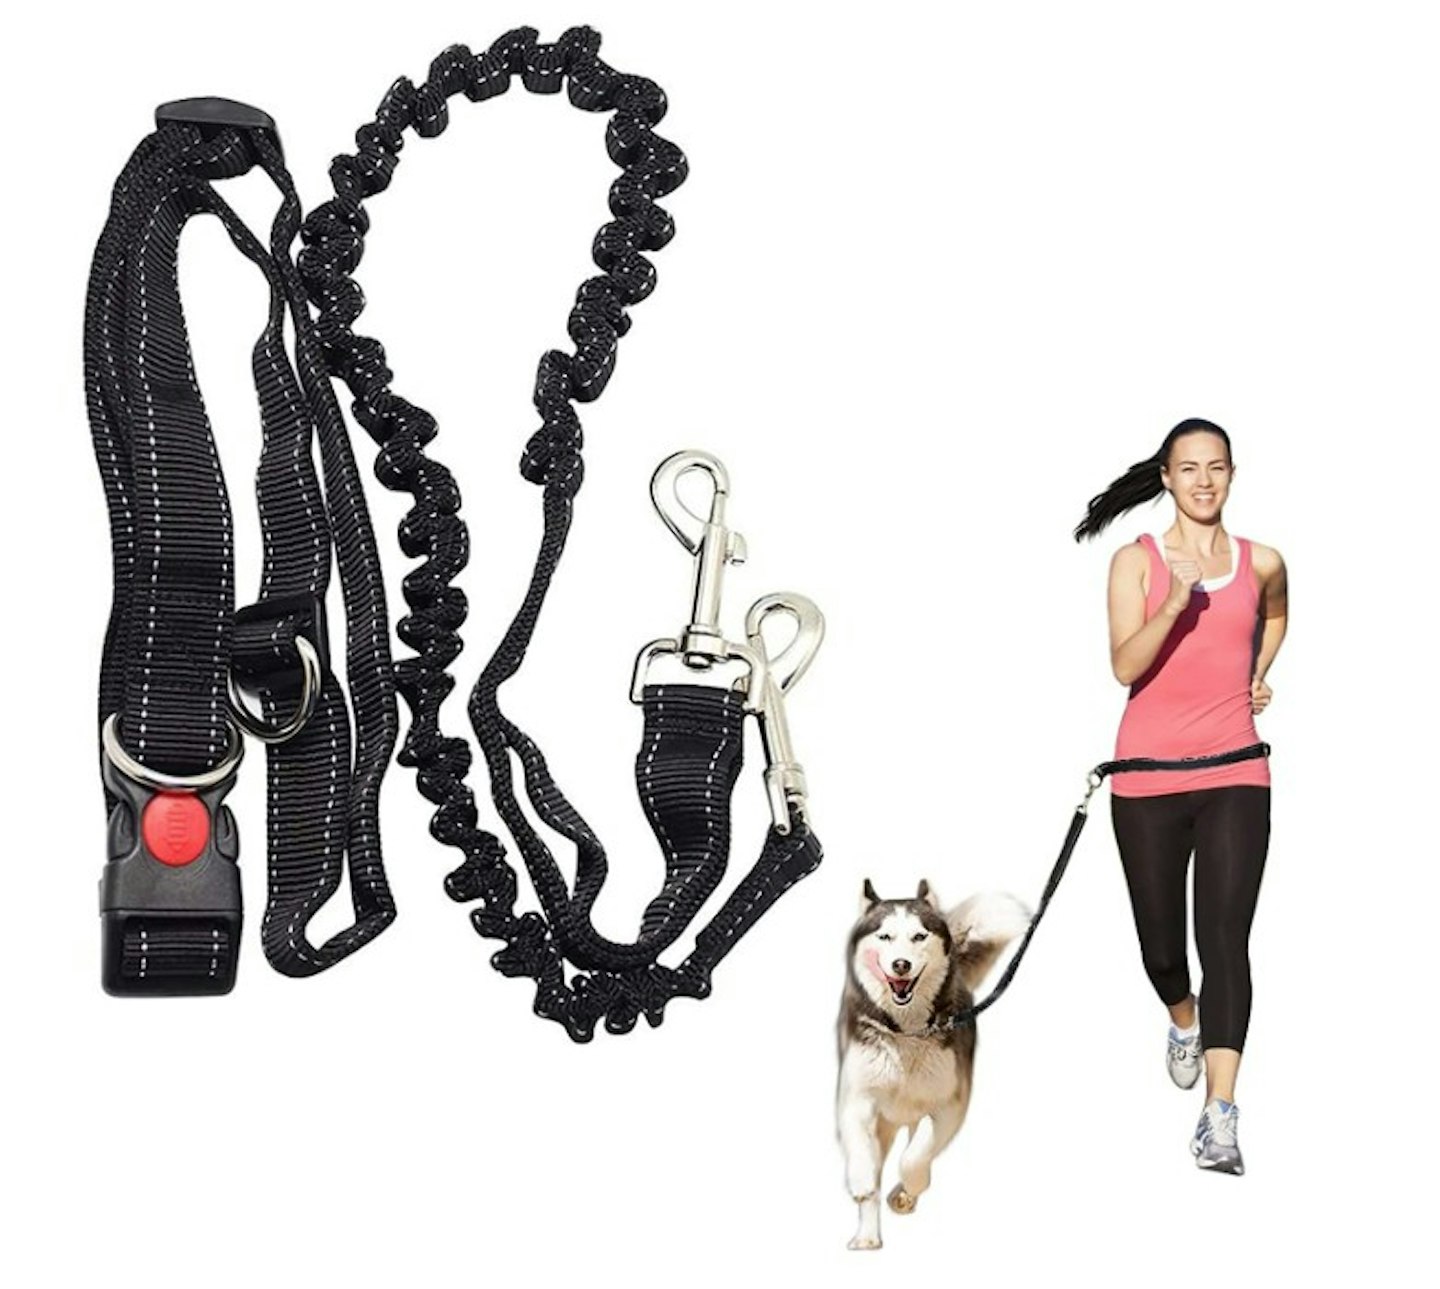  Hands Free Running Dog Lead, Multifunctional Adjustable Dog Leash